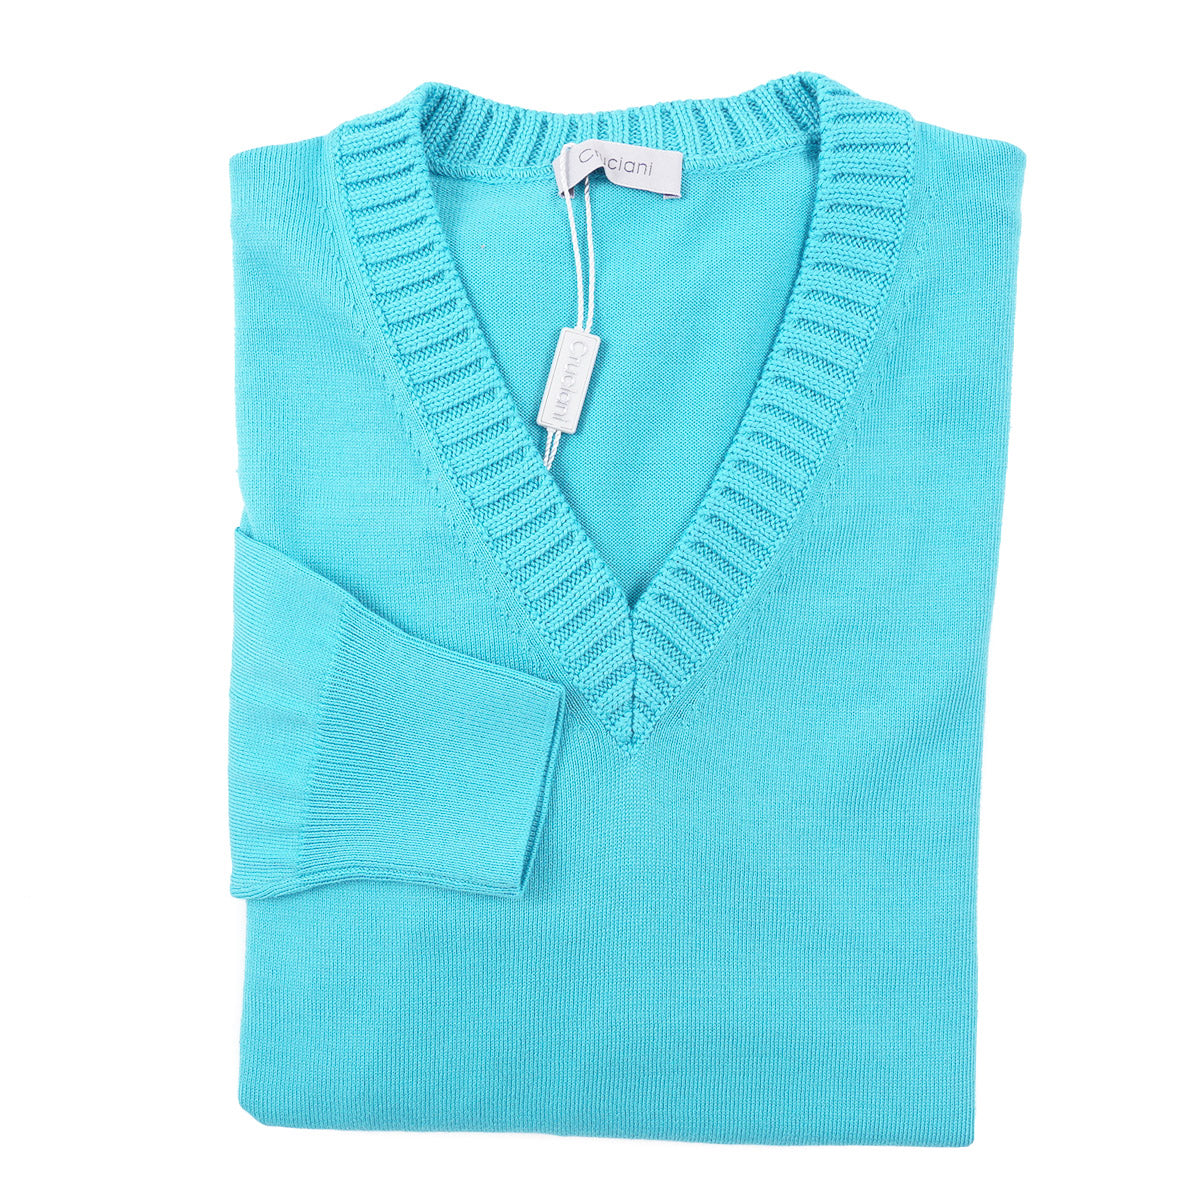 Cruciani Knit Cotton Sweater - Top Shelf Apparel